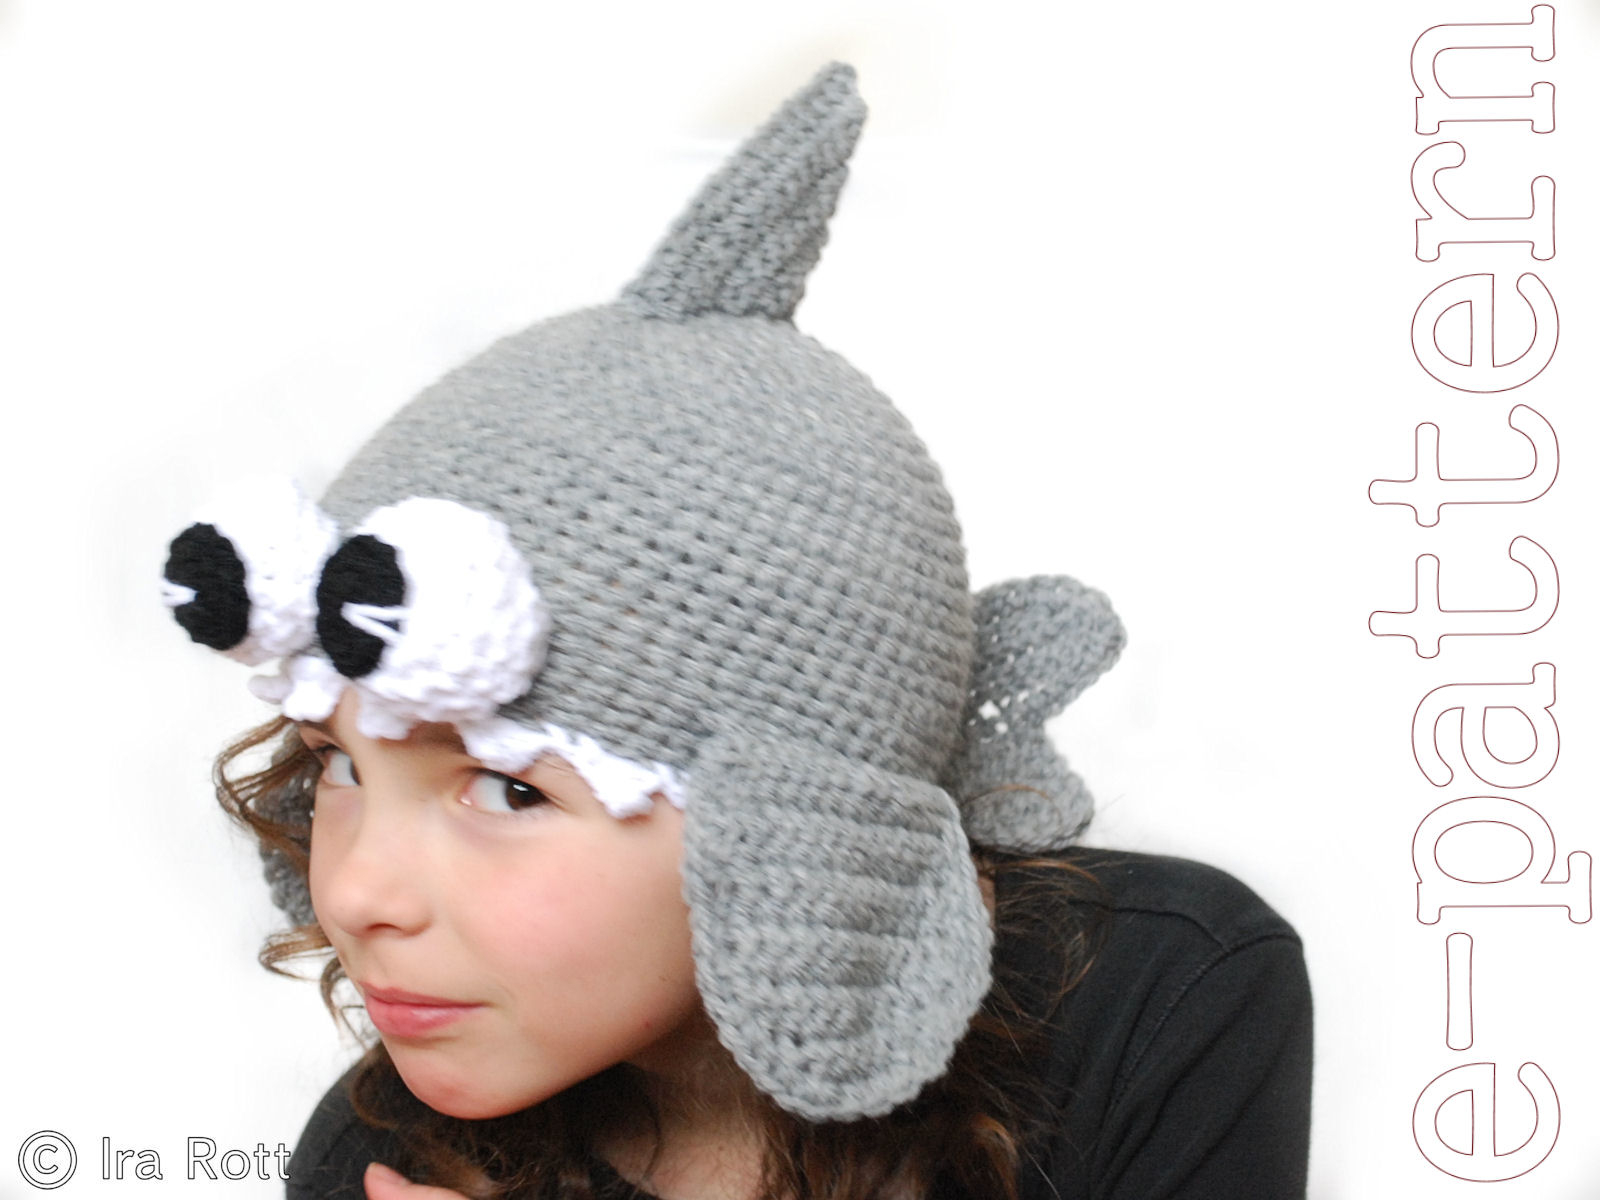 Free Crochet Shark Hat Pattern Fashion Crochet Design Ira Rott Shark Hat With Googly Eyes For